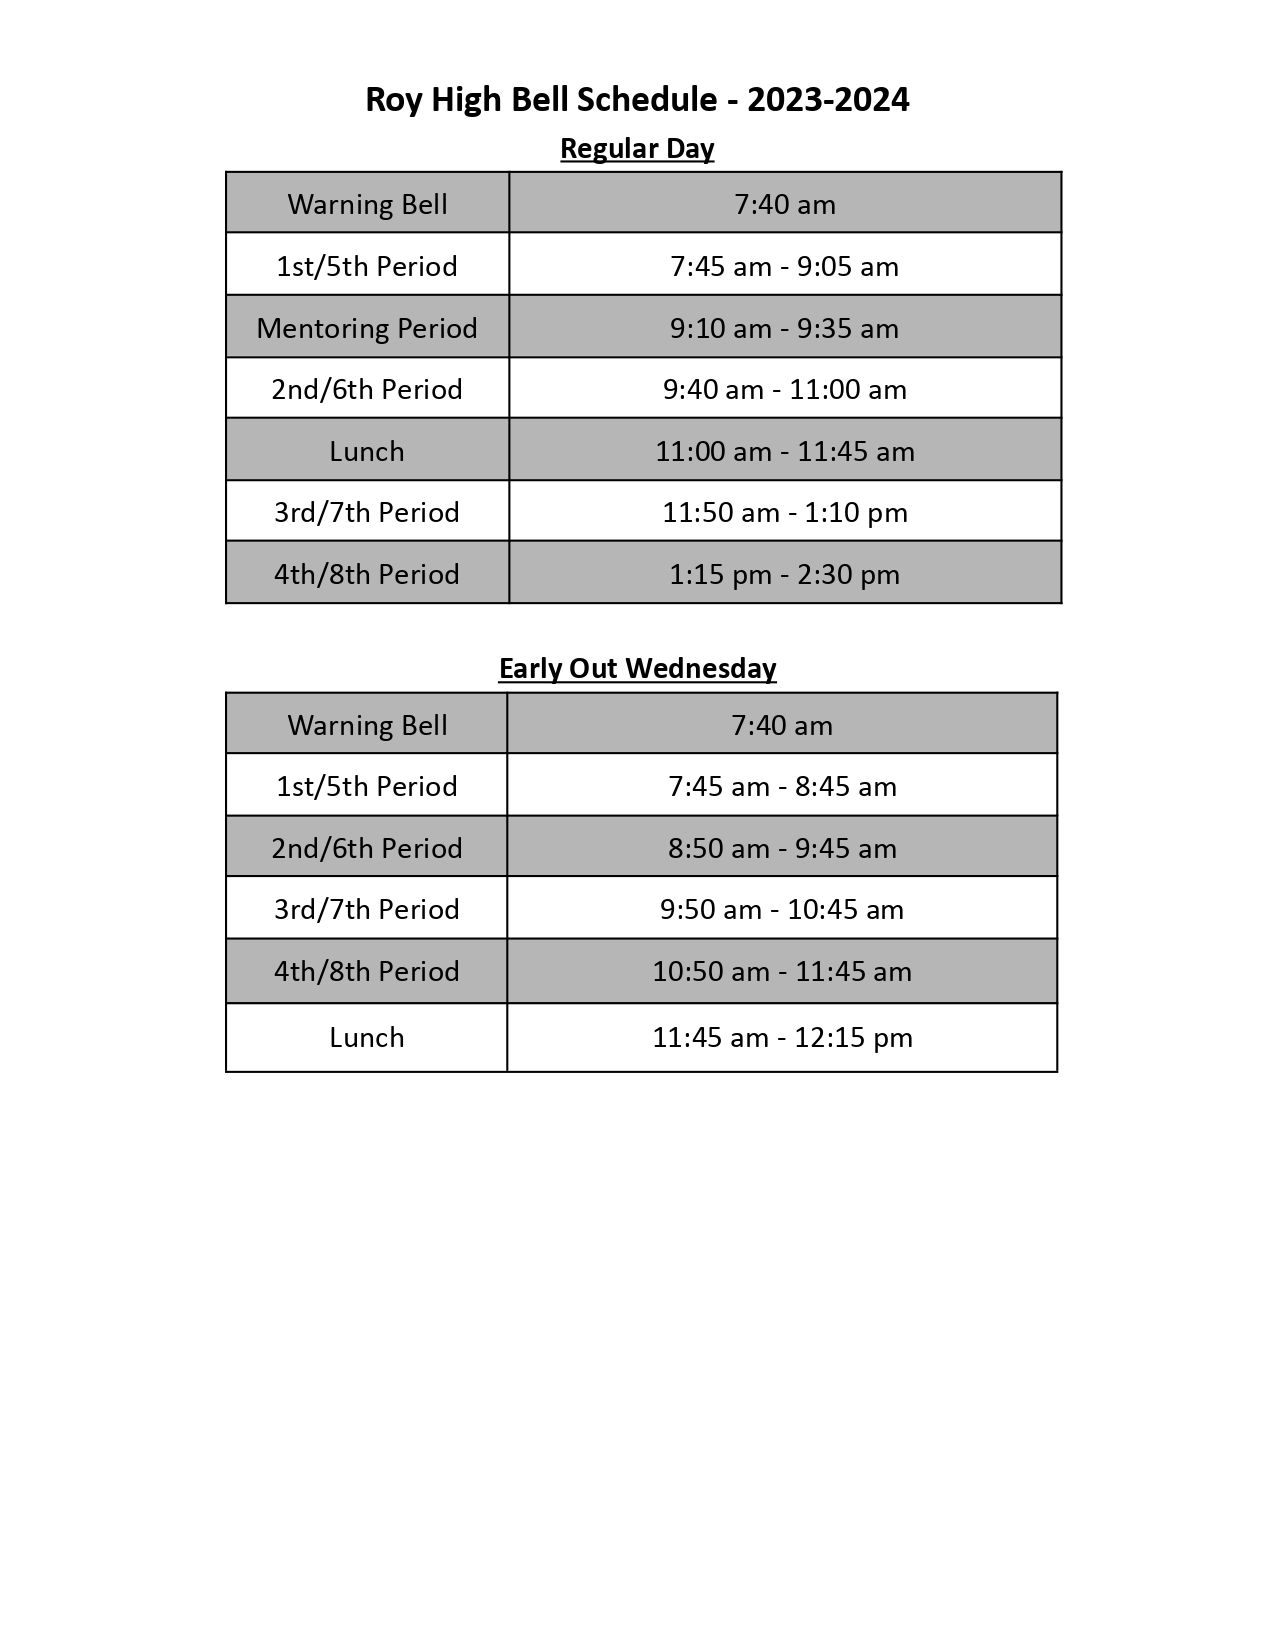 bell schedule